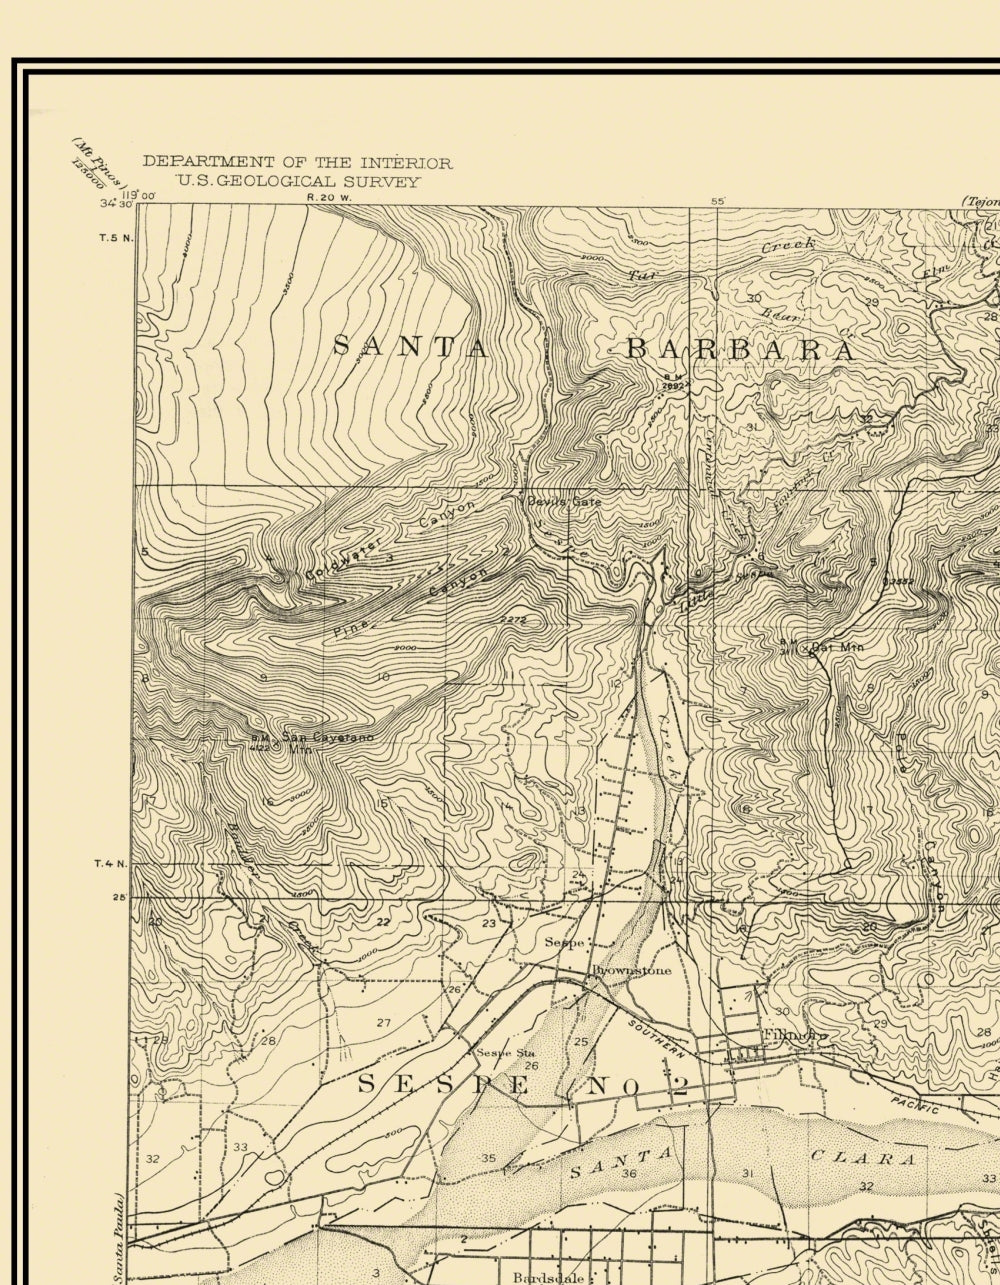 Topographical Map - Piru California Quad - USGS 1921 - 23 x 29.56 - Vintage Wall Art